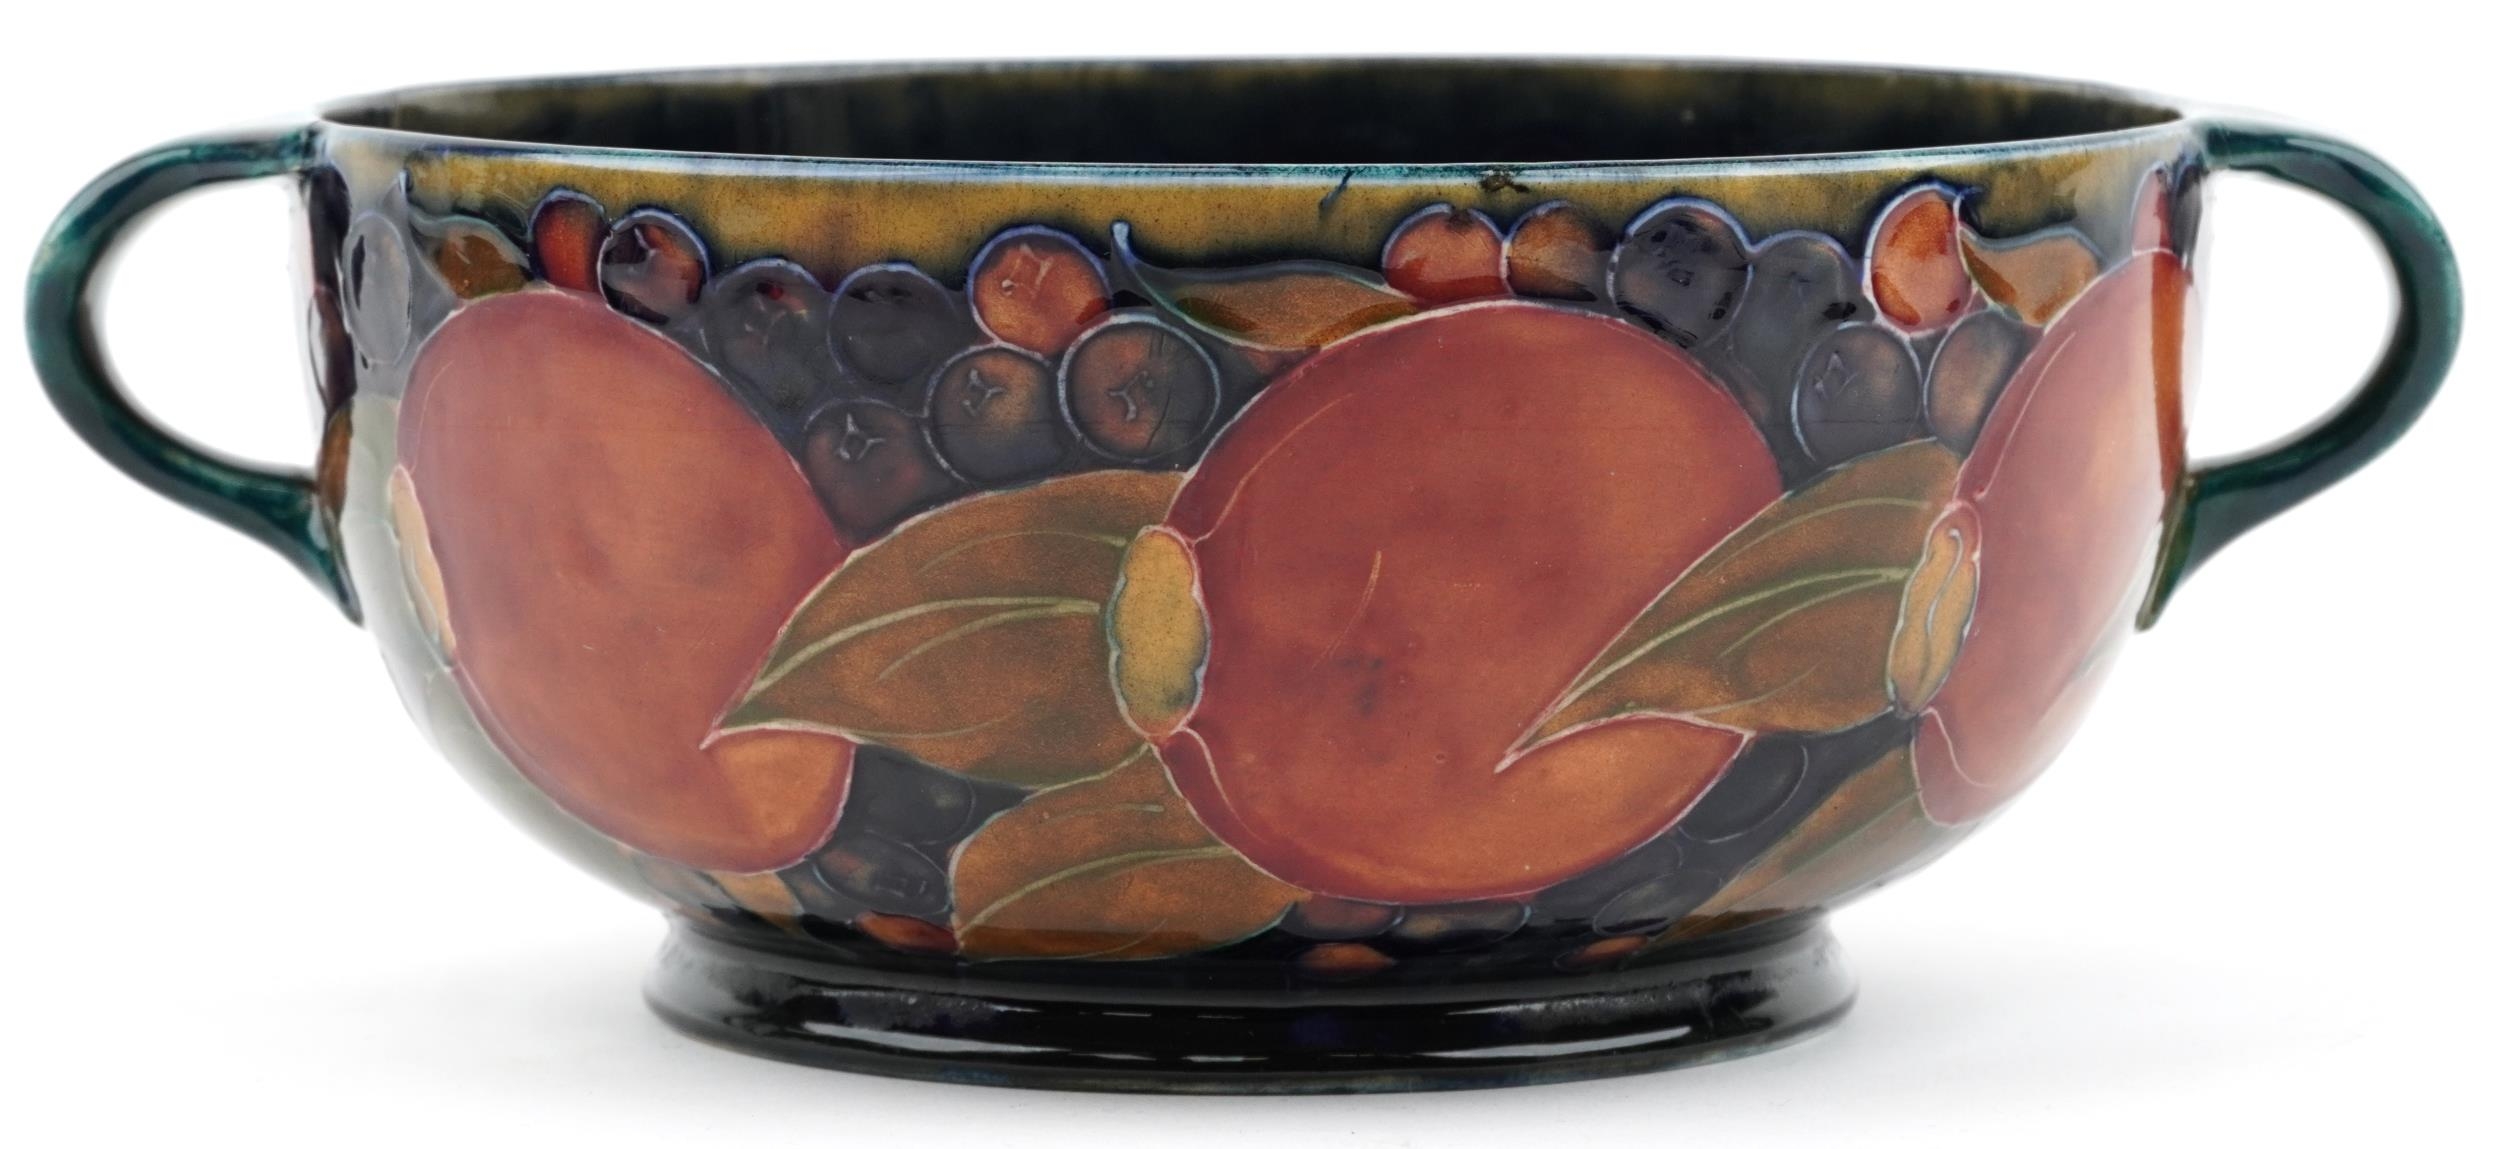 Moorcroft Pomegranate pattern fruit bowl, 28cm in diameter - Image 2 of 5